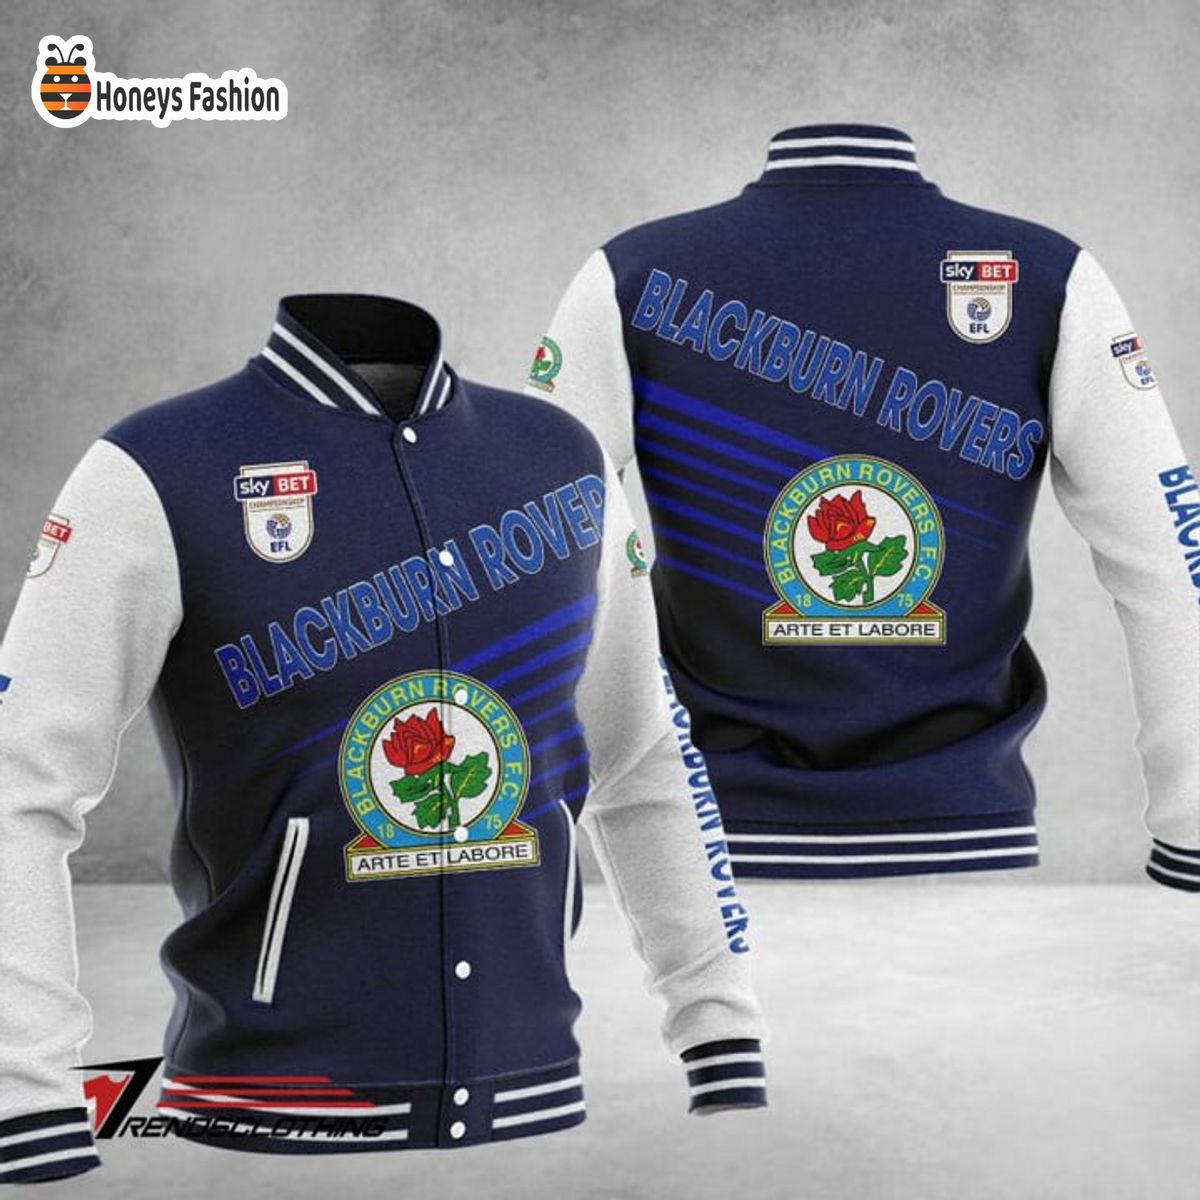 Blackburn Rovers Baseball Jacket